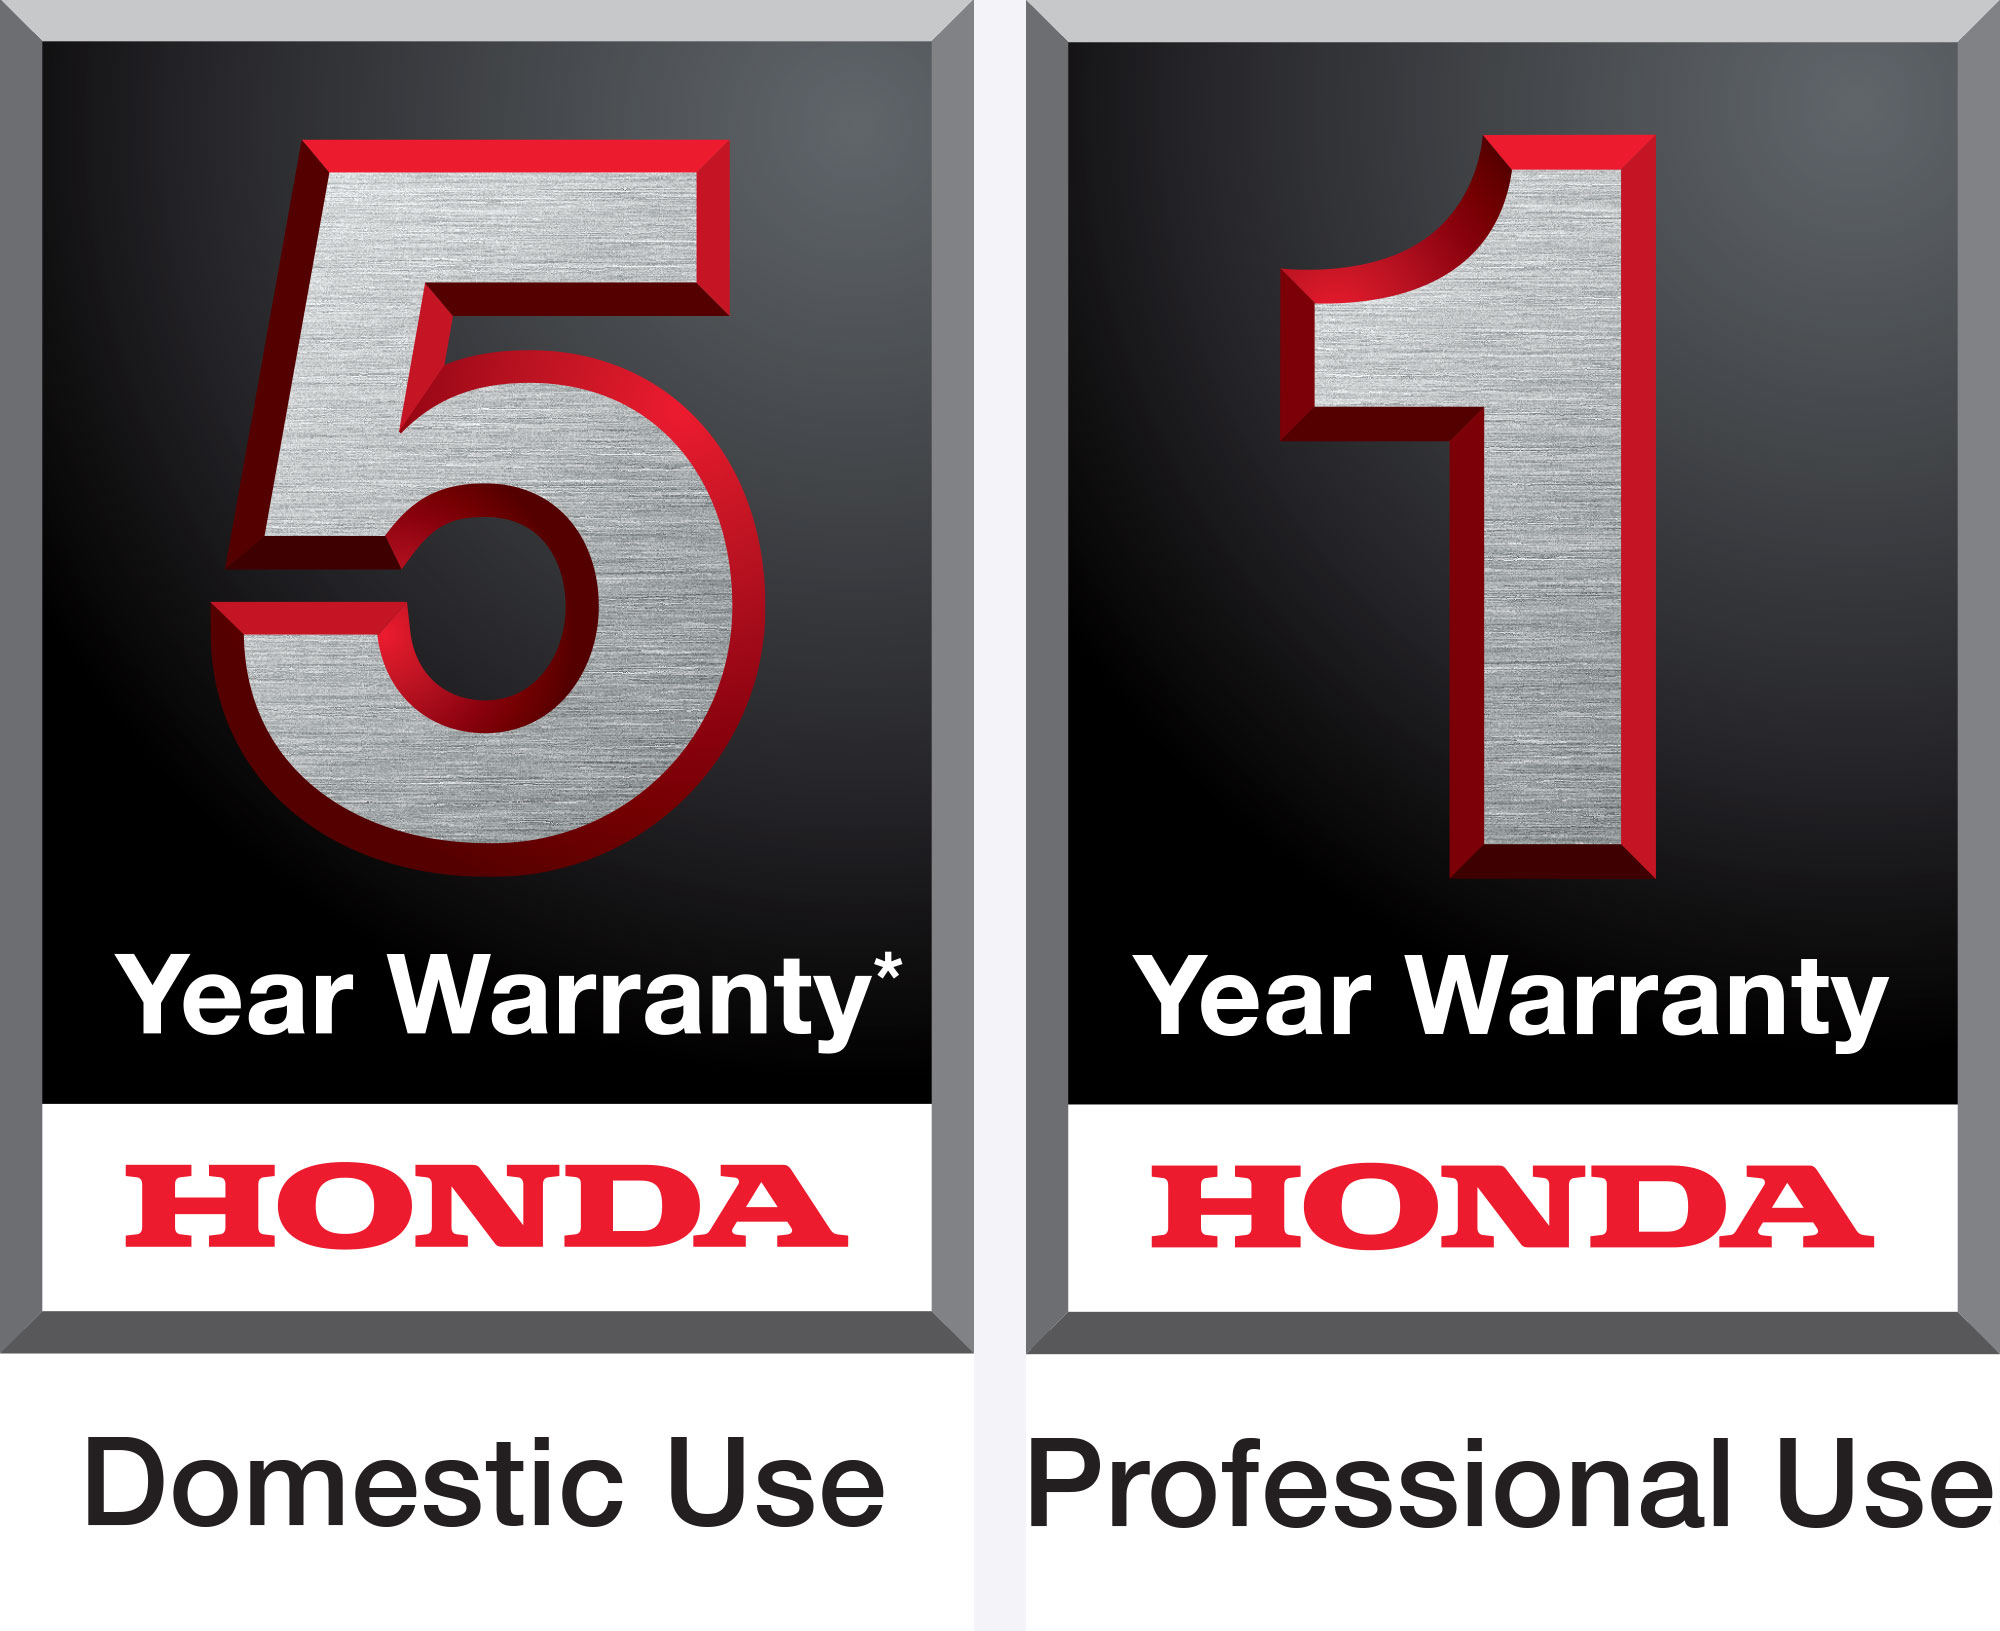 5 year warranty. Honda. Domestic Use. 1 year warranty. Honda. Professional Use.